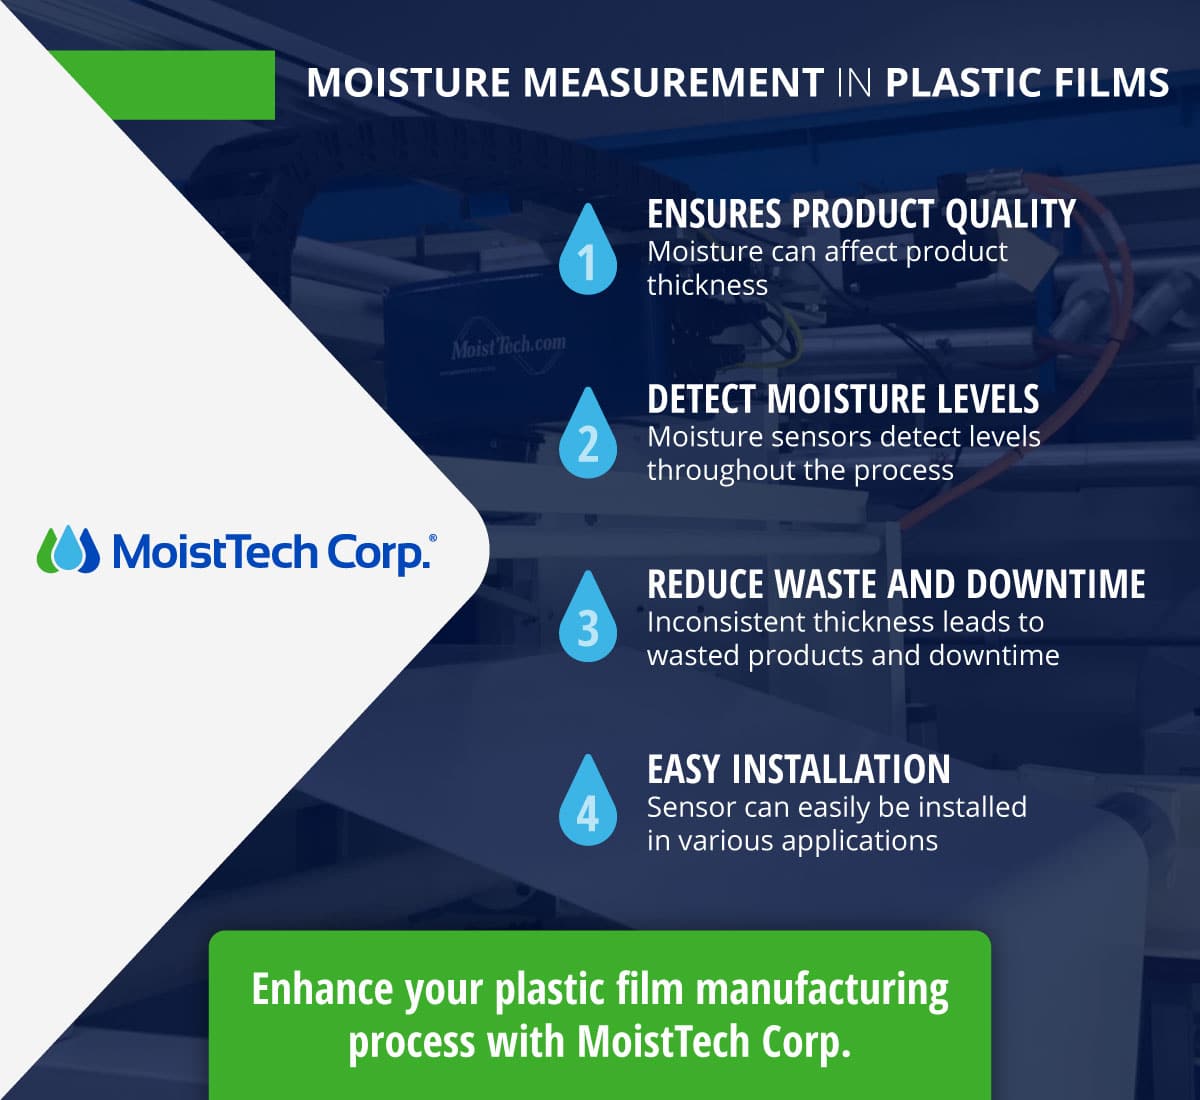 Moisture Measurement in Plastic films infographic